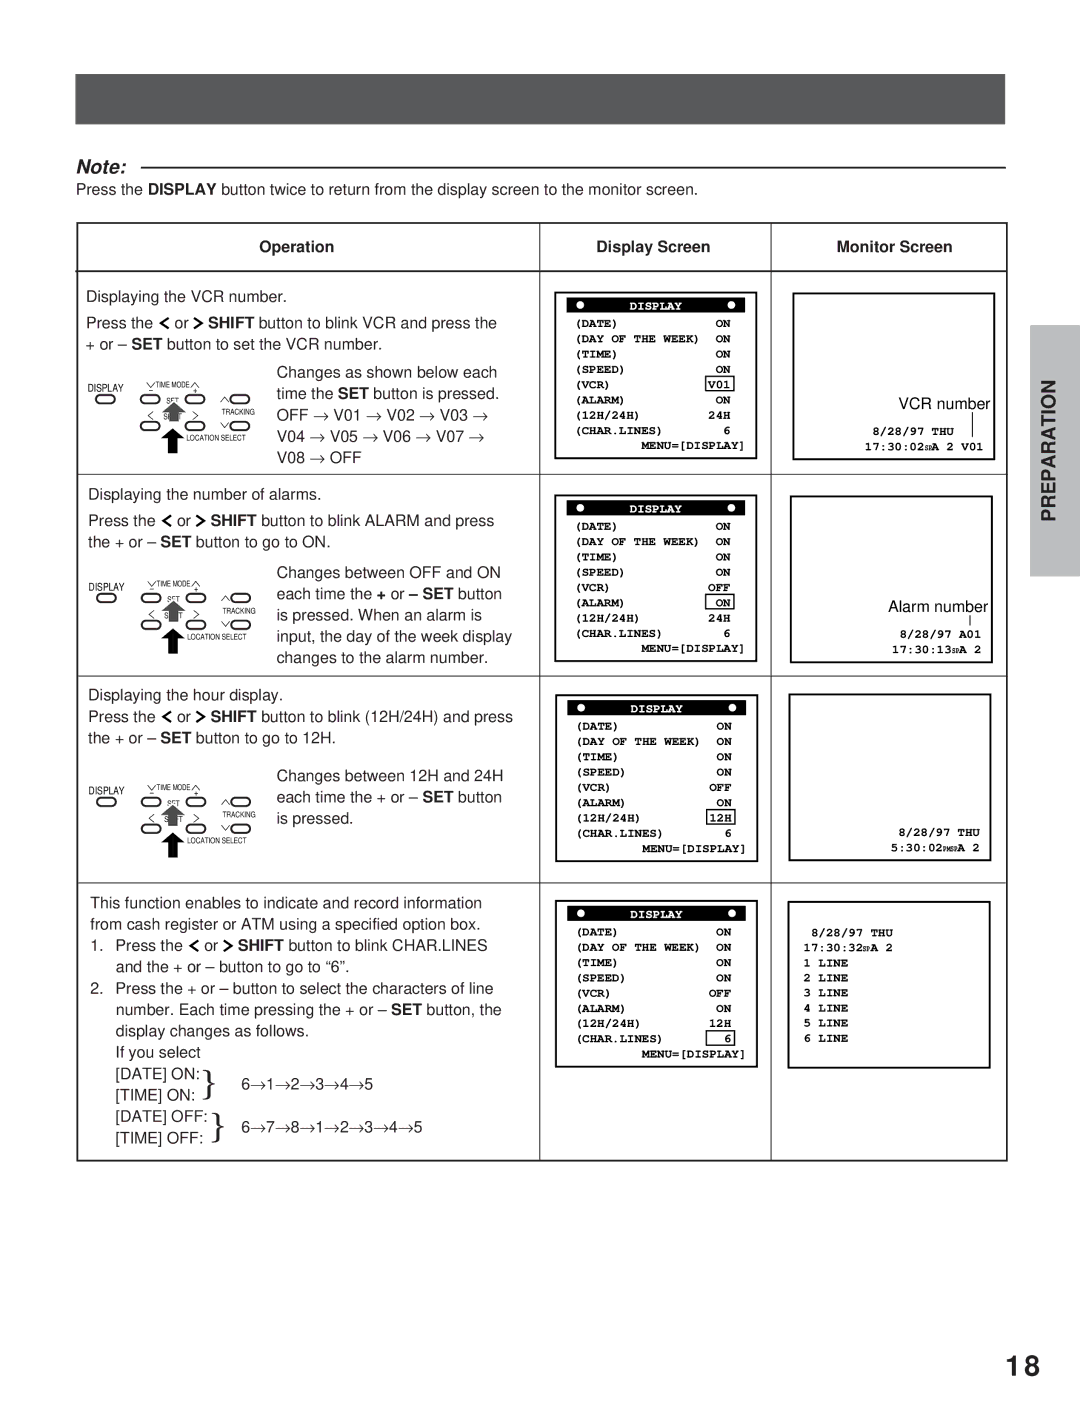 Toshiba kV-9168A Press Shift button to blink VCR and press, + or SET button to set the VCR number, V04 → V05 → V06 → V07 → 